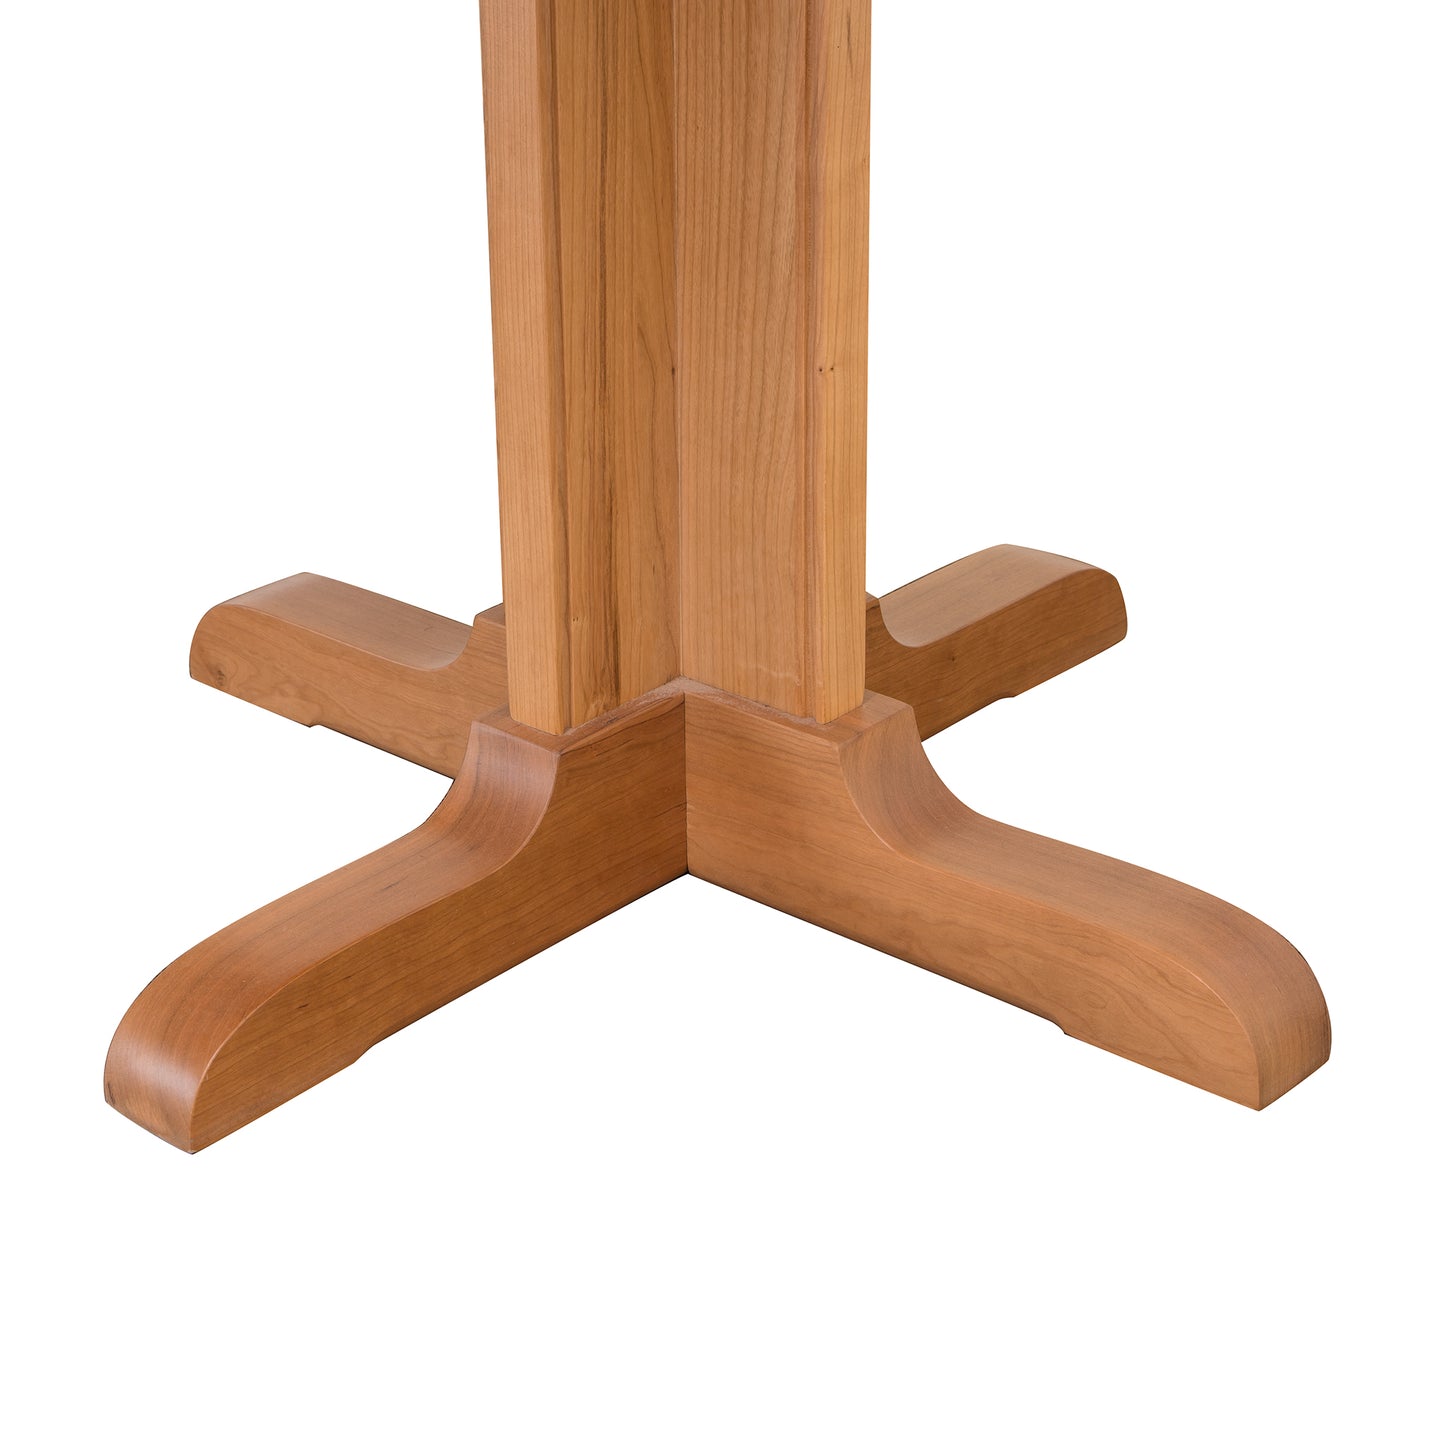 A sturdy Lyndon Furniture Single-Leg Round Pedestal Table with a cross base.